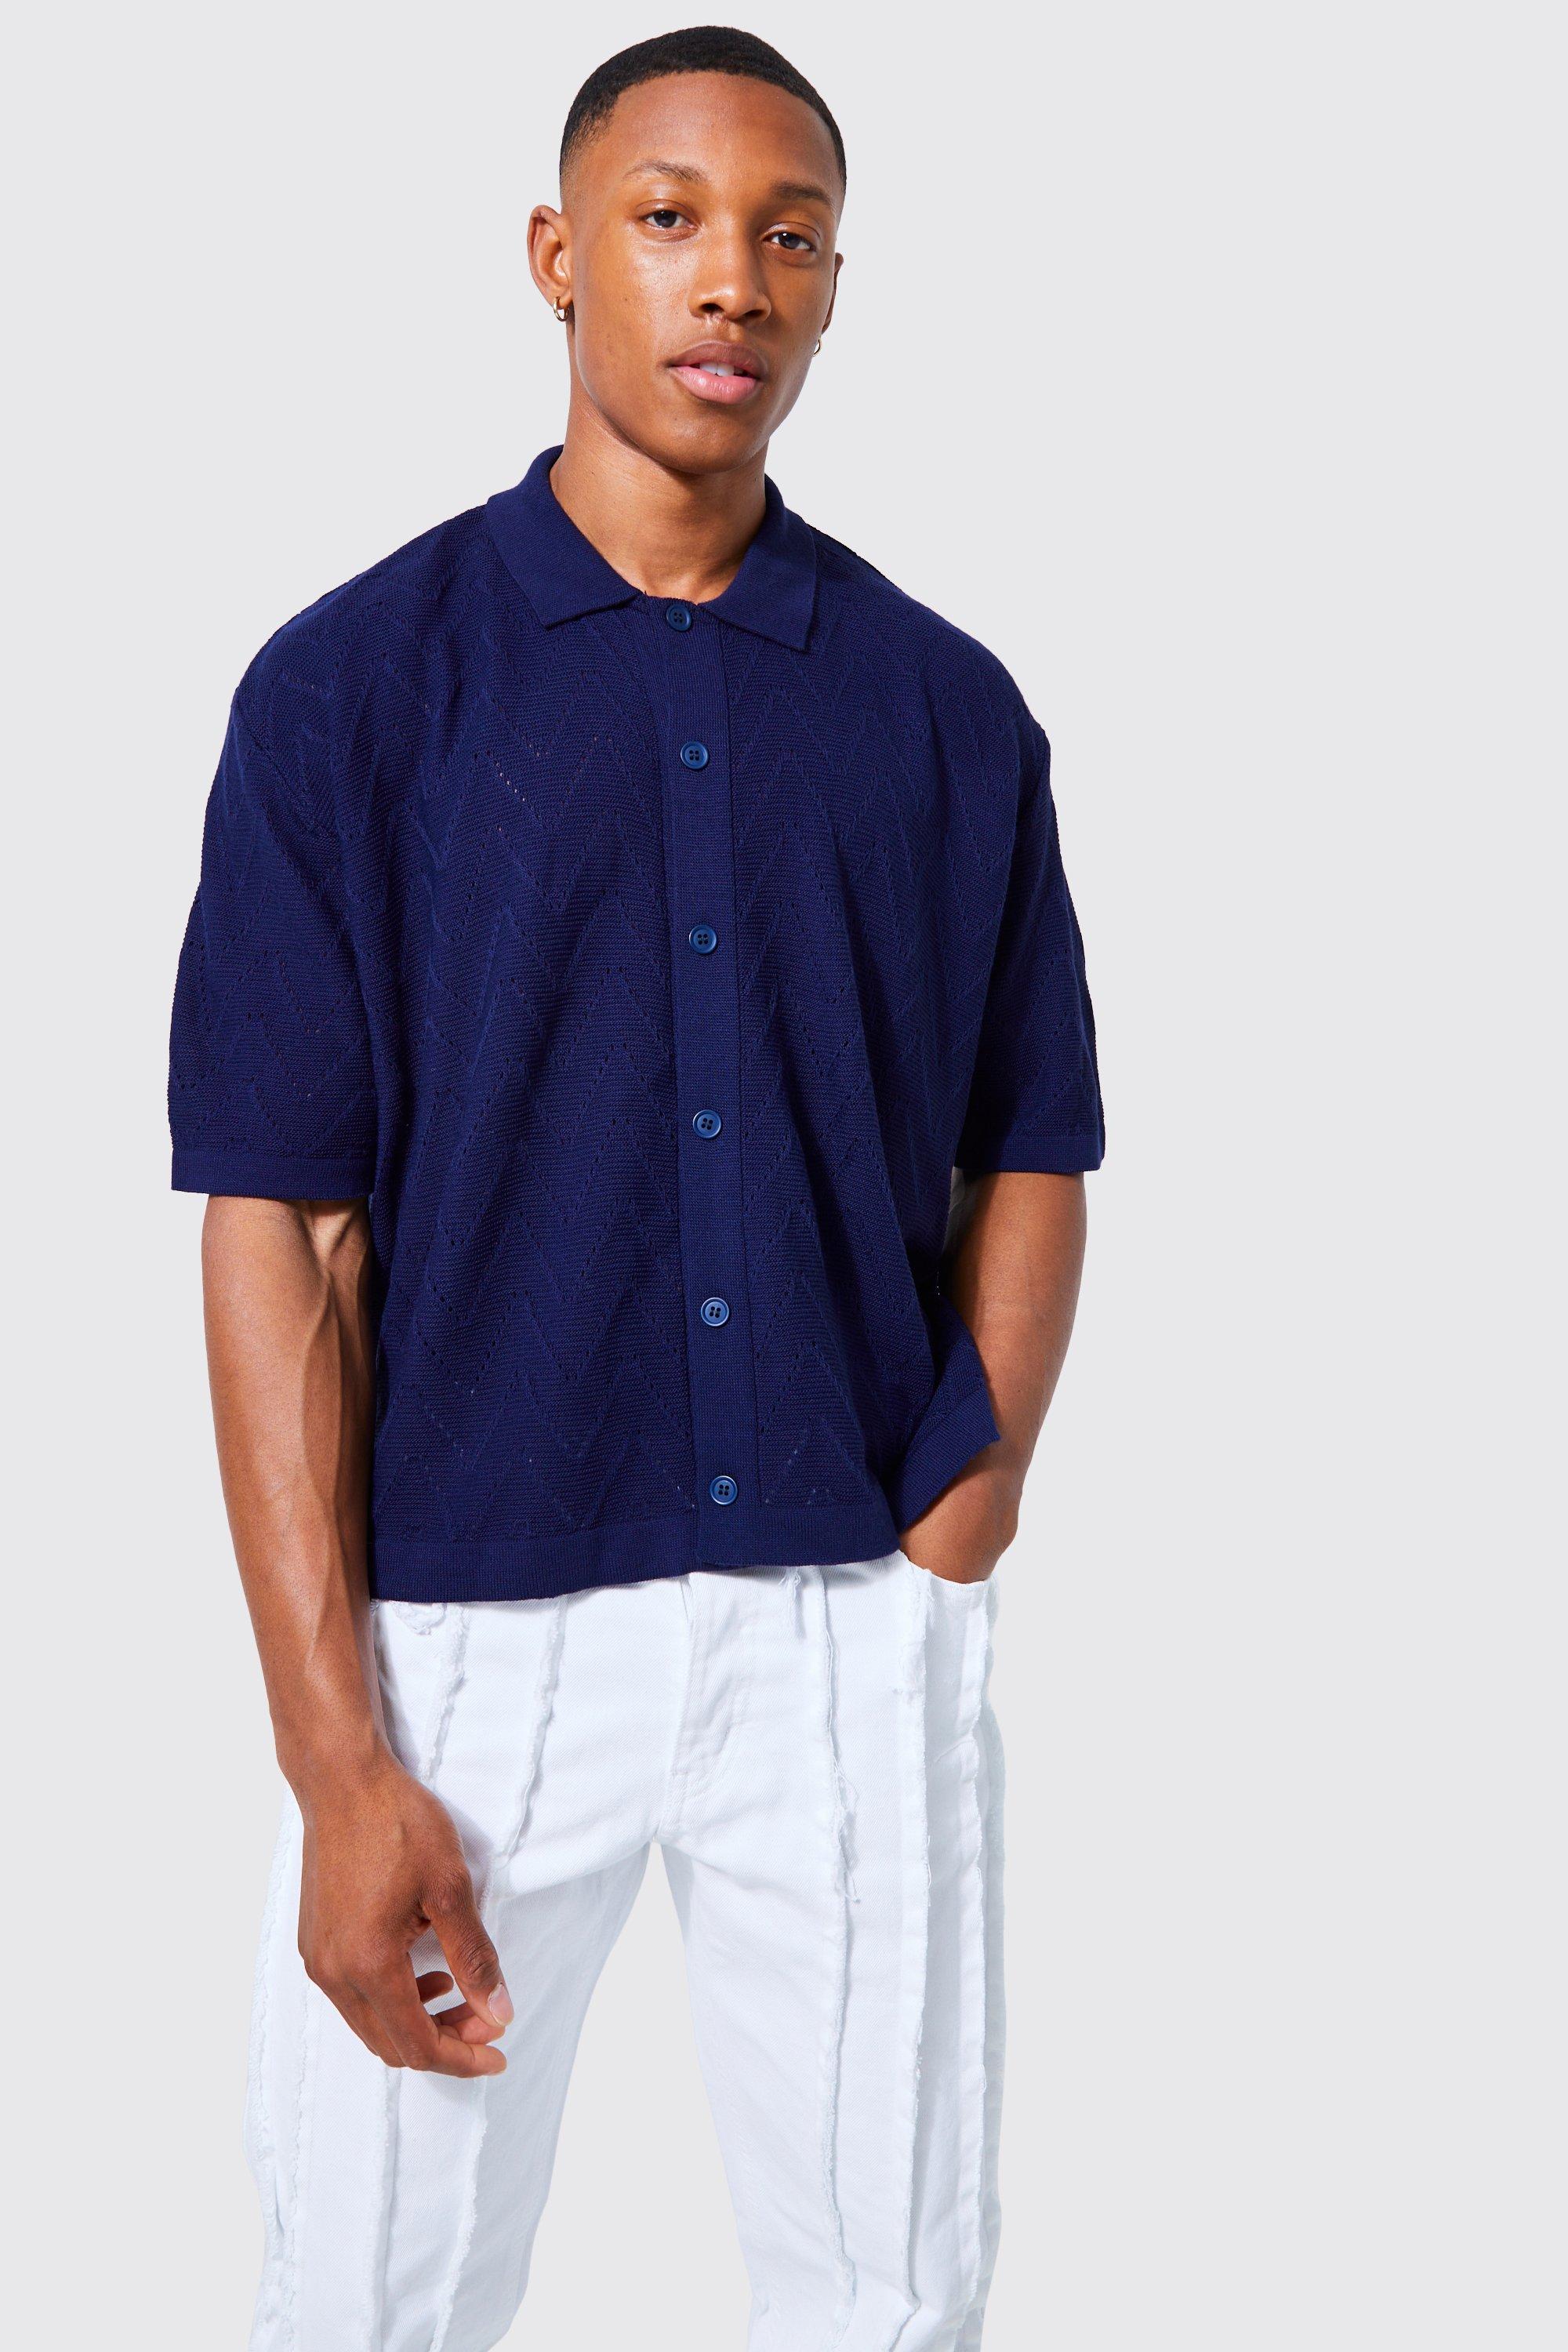 Mens Navy Short Sleeve Boxy Open Stitch Knitted Shirt, Navy